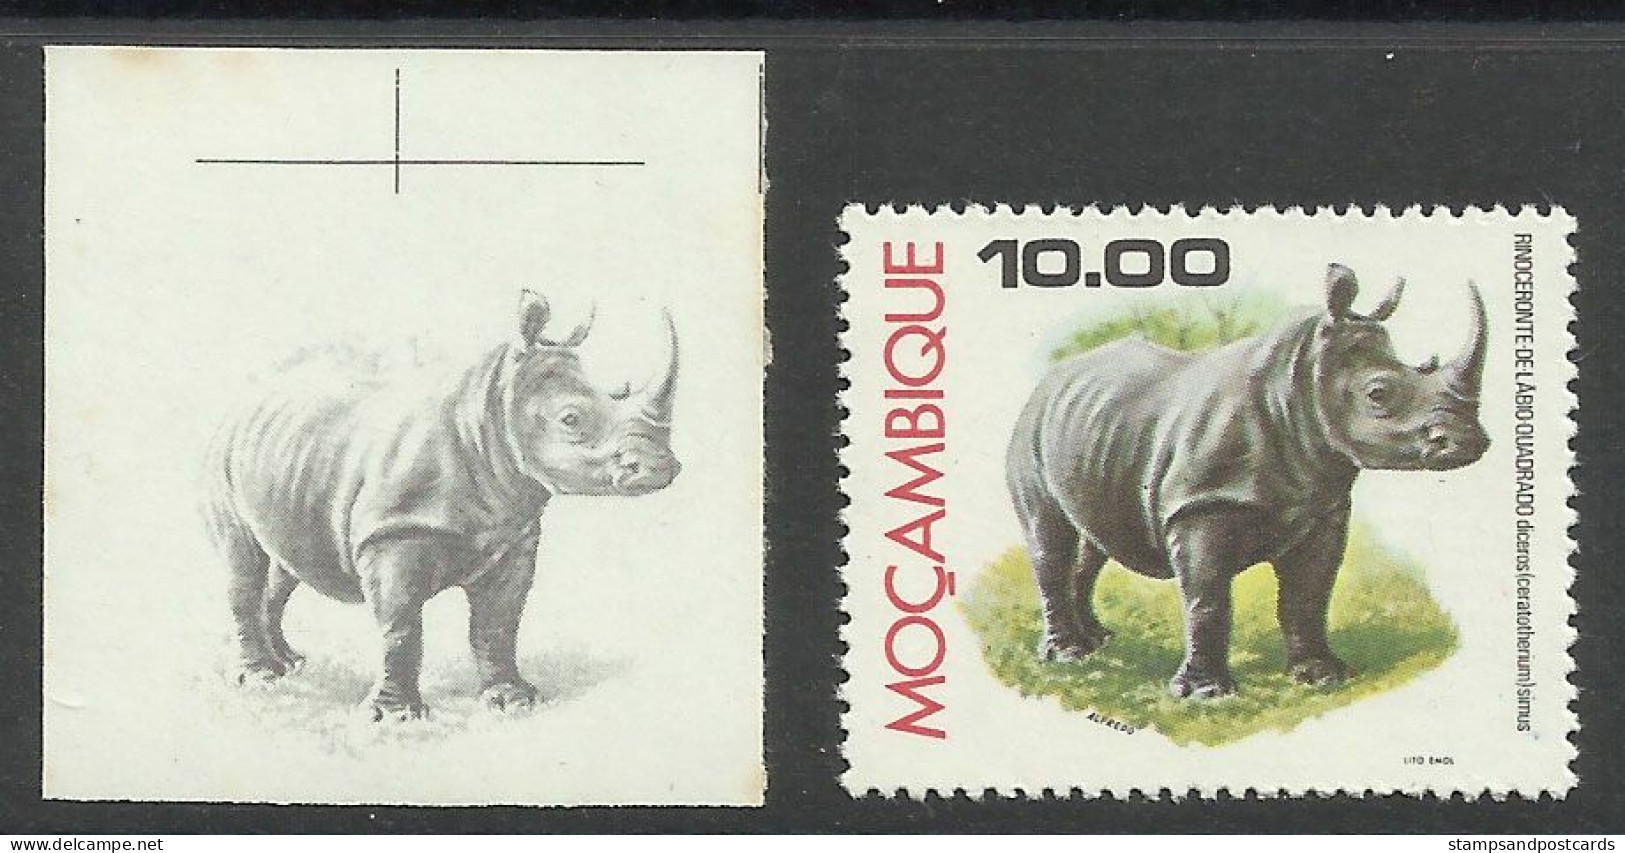 Mozambique 1976 Preuve De Couleur Rhinocéros Moçambique 1976 Color Proof Rhino Rhinocerus - Rhinozerosse